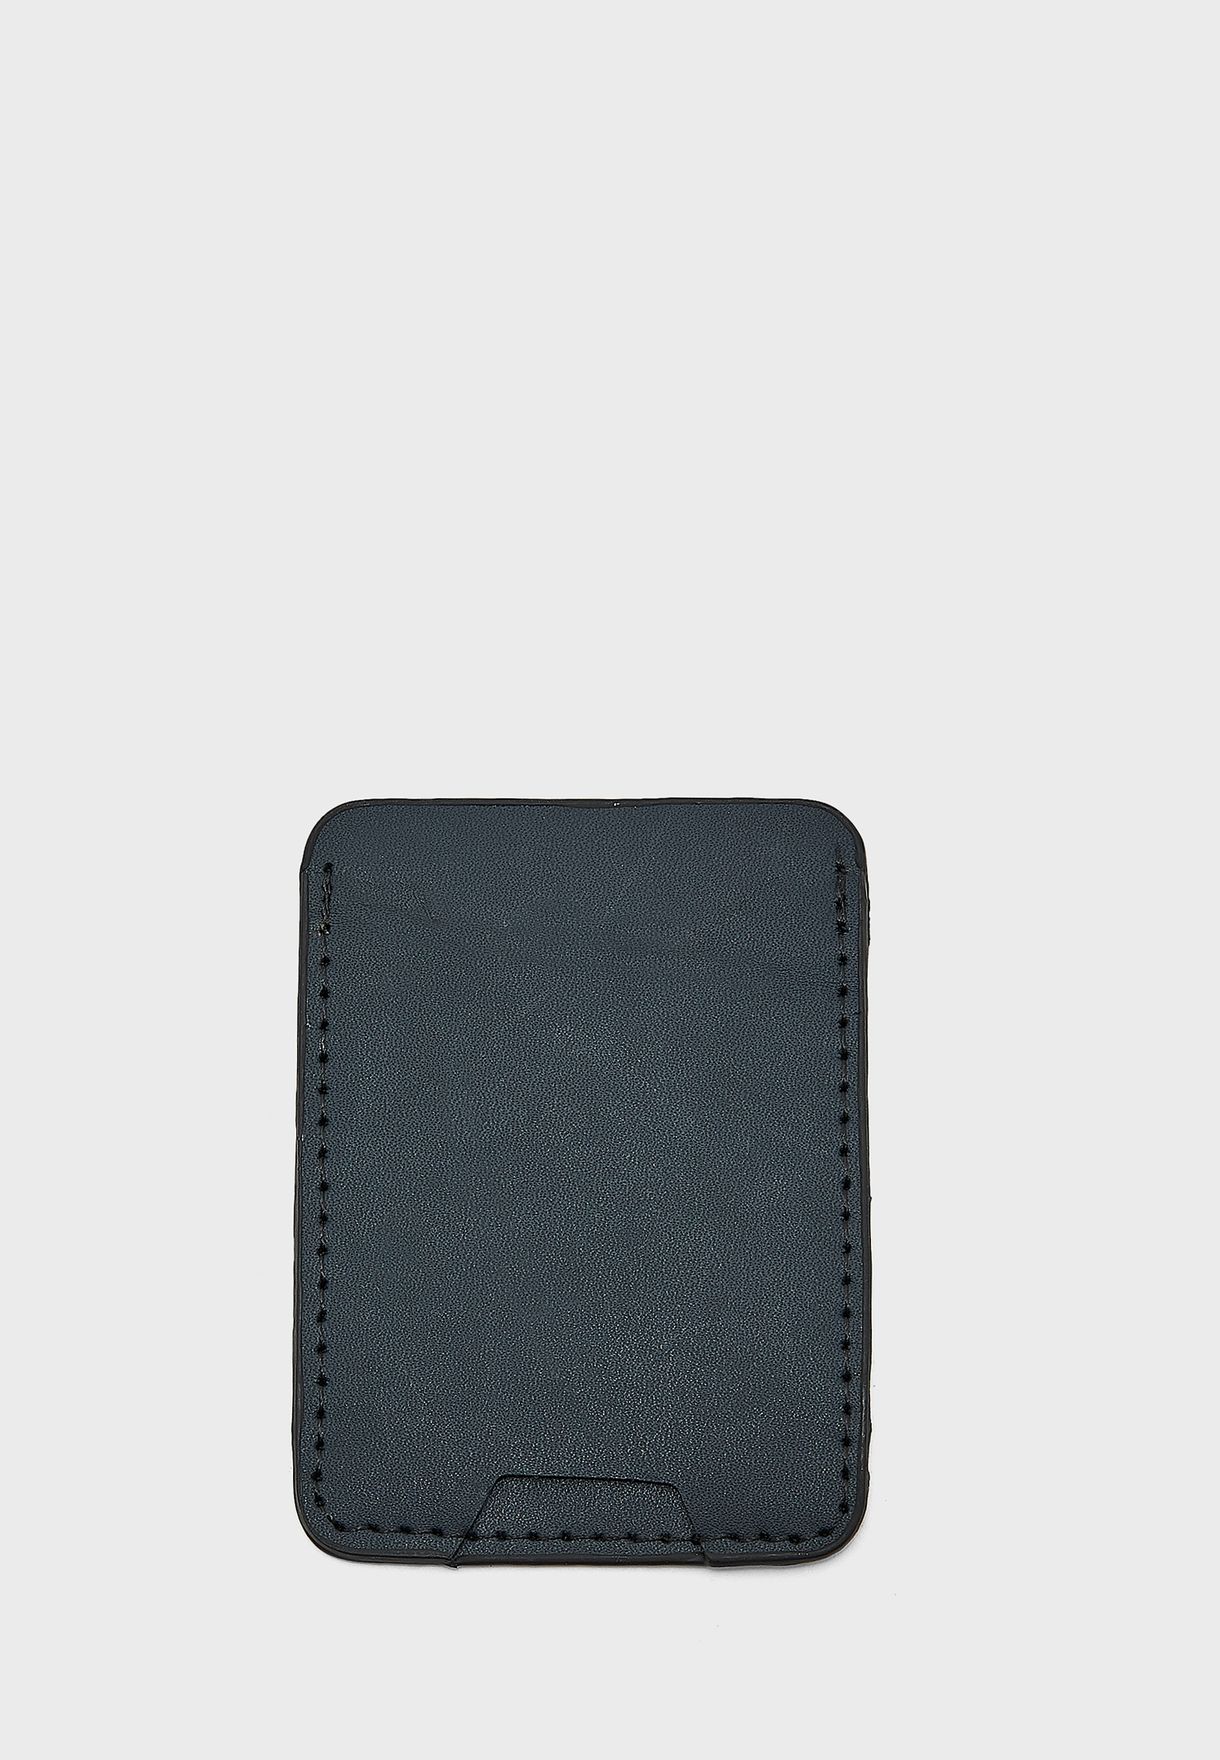 Genuine Leather Adhesive Phone Pocket For Credit Card & Metro Rail